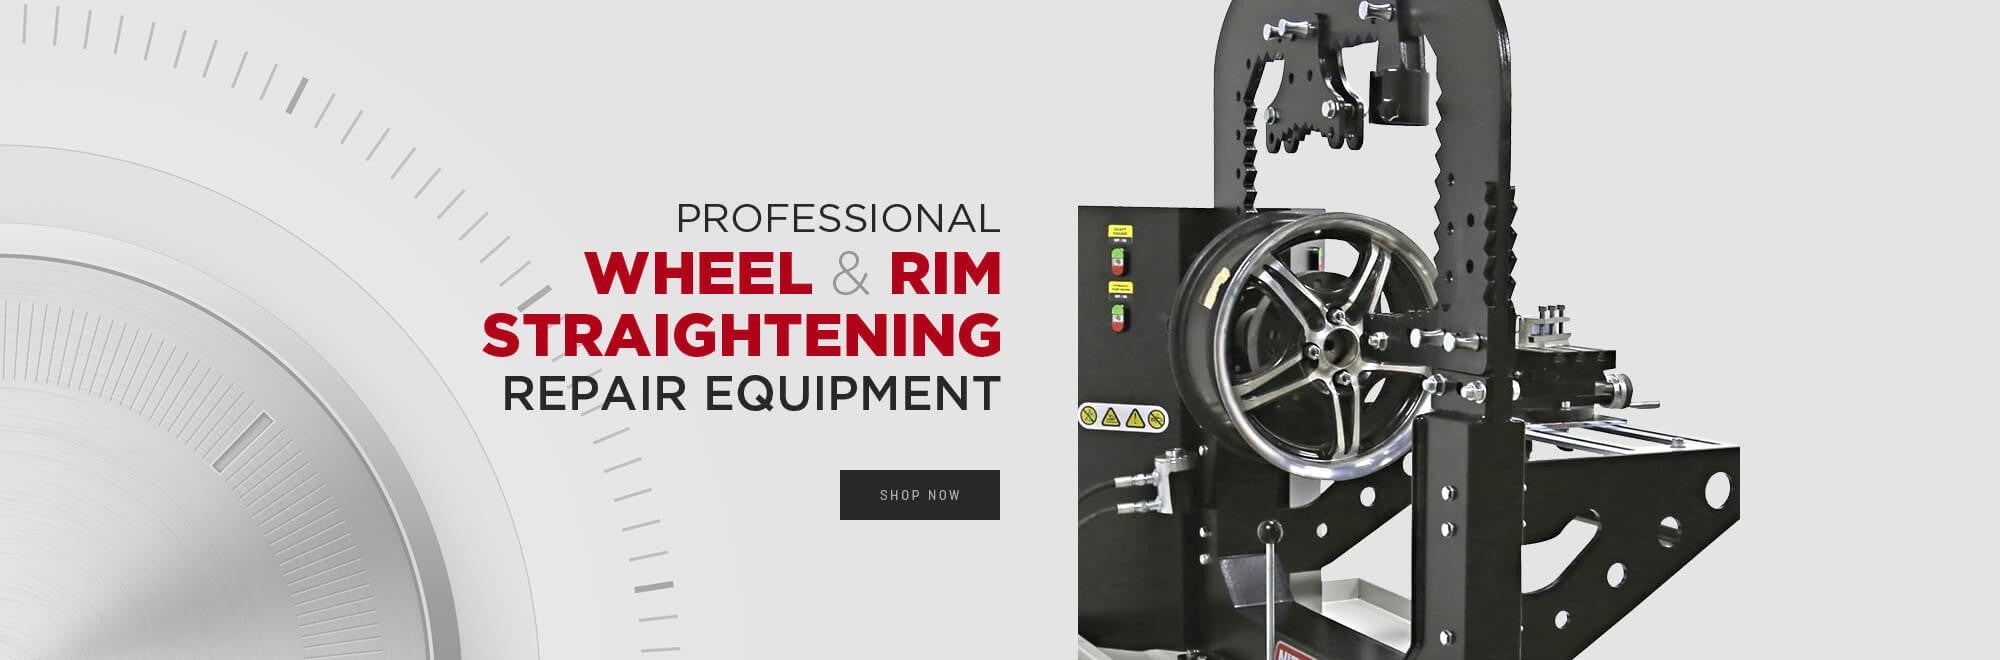 Professional wheel and rim straightening repair equipment